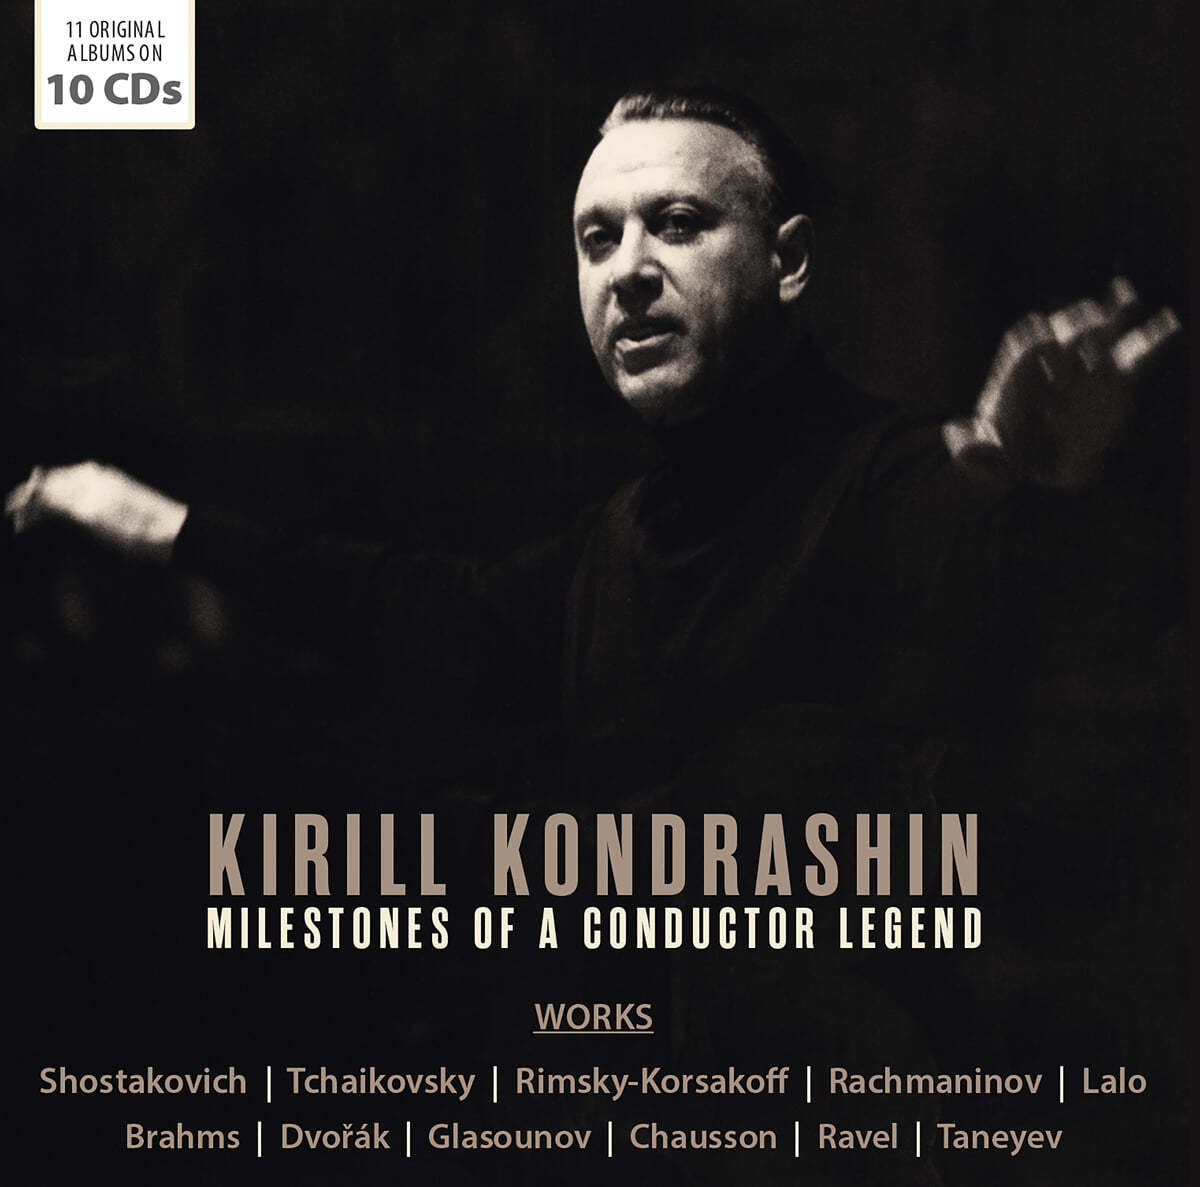 Kirill Kondrashin 키릴 콘드라신 명연주 모음집 (Milestones of a Conductor Legend)